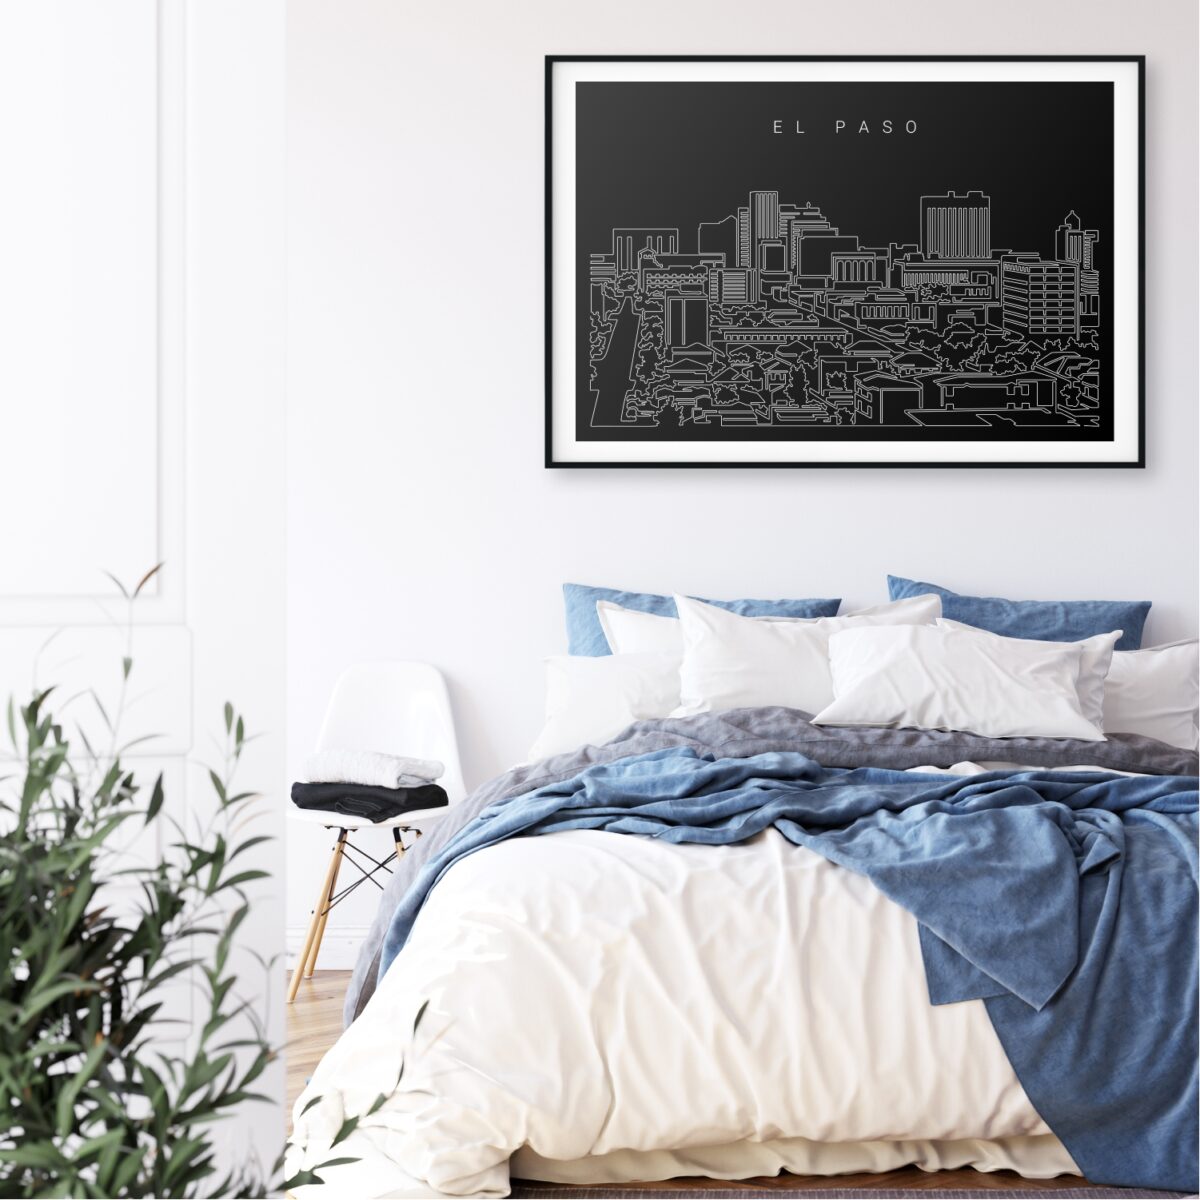 El Paso Skyline Art Print for Bed Room - Dark